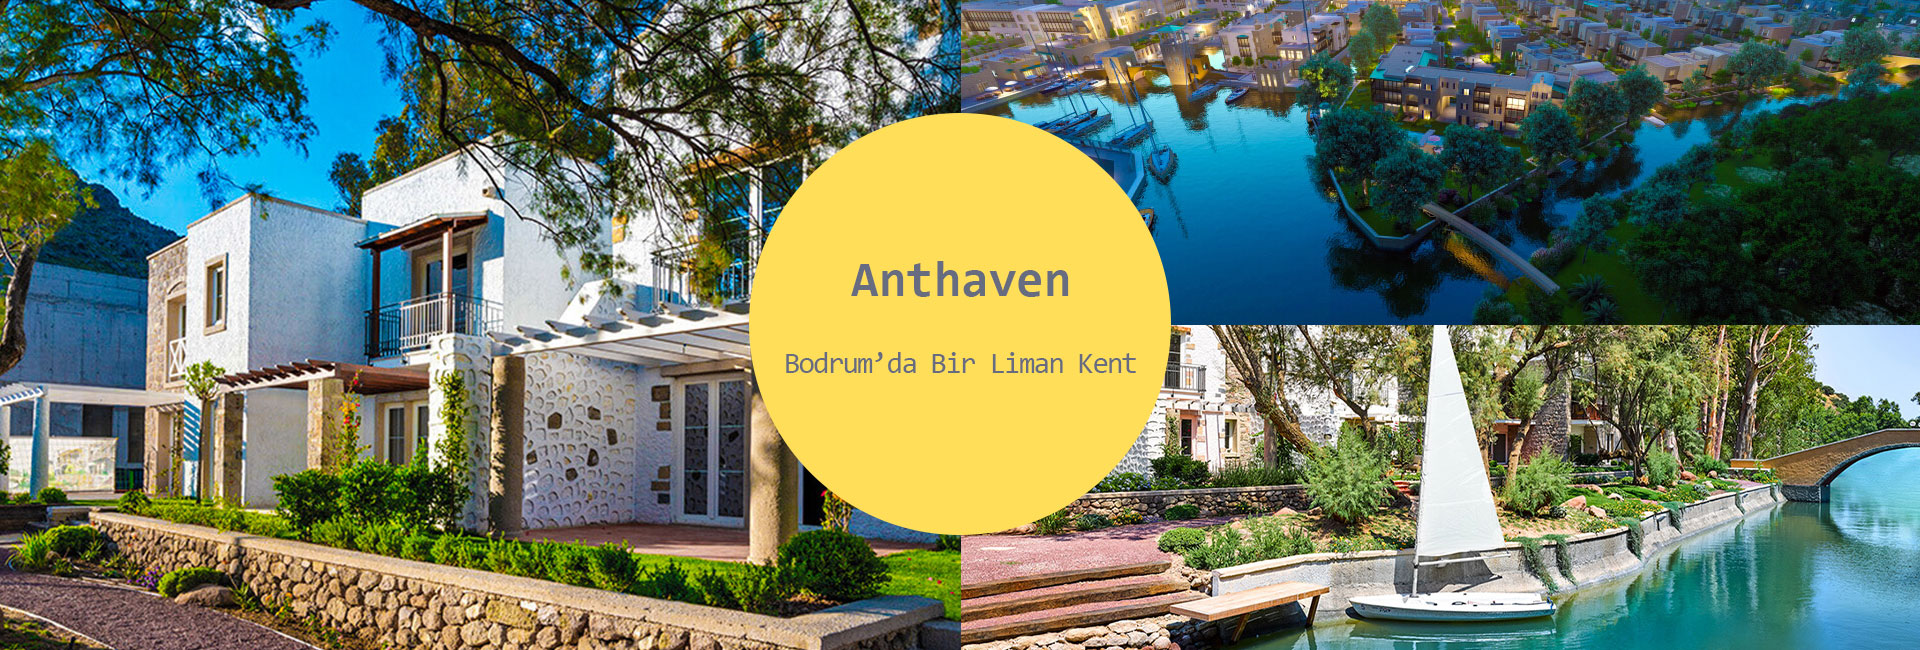 Anthaven